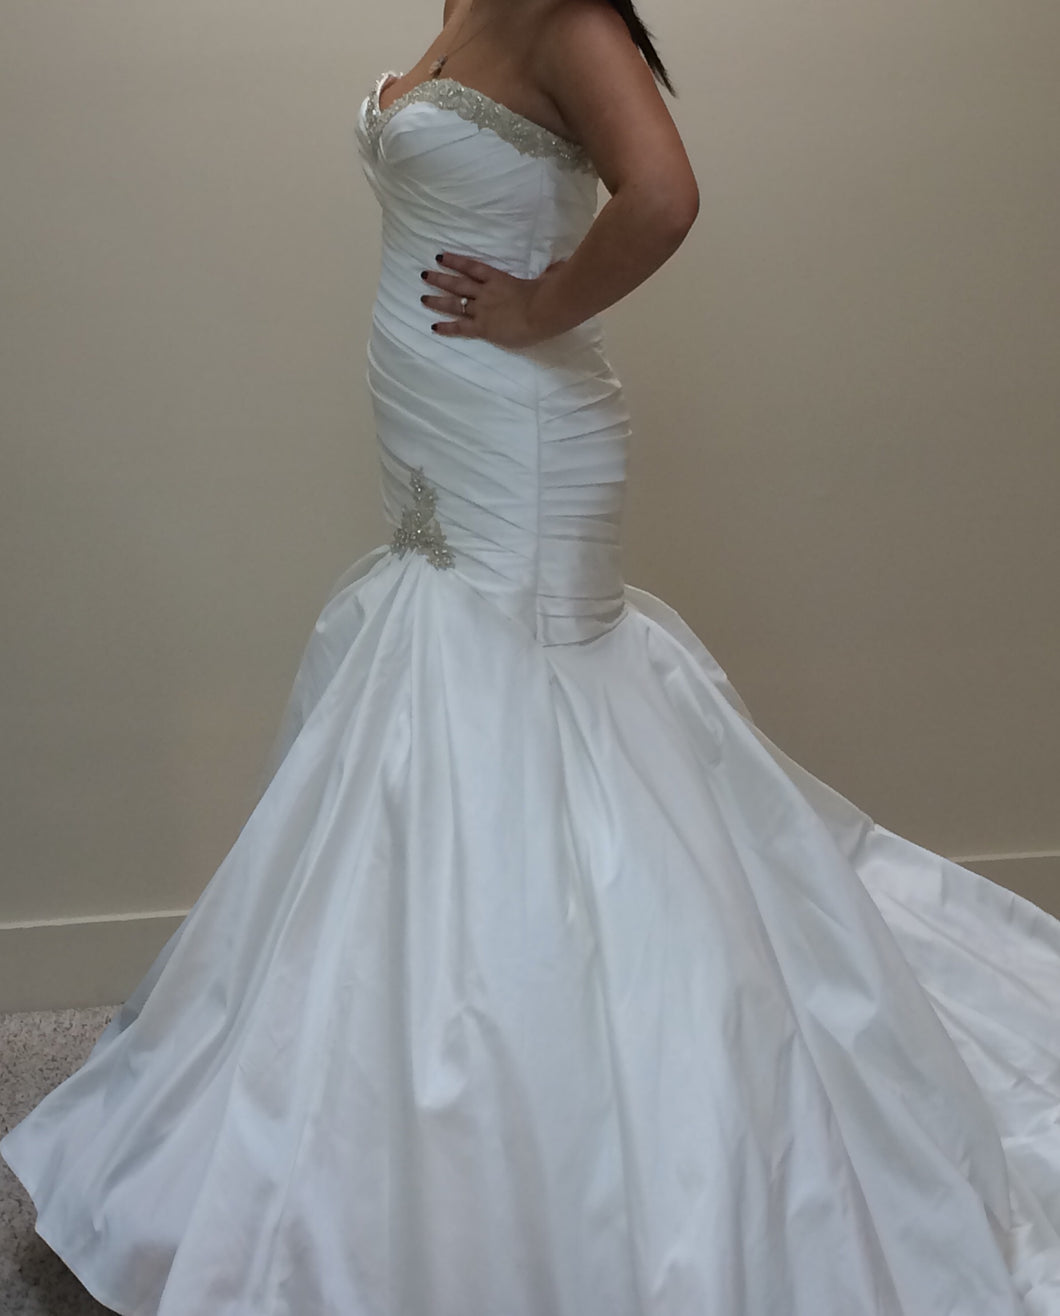 Enzoani 'Mermaid' size 12 used wedding dress side view on bride